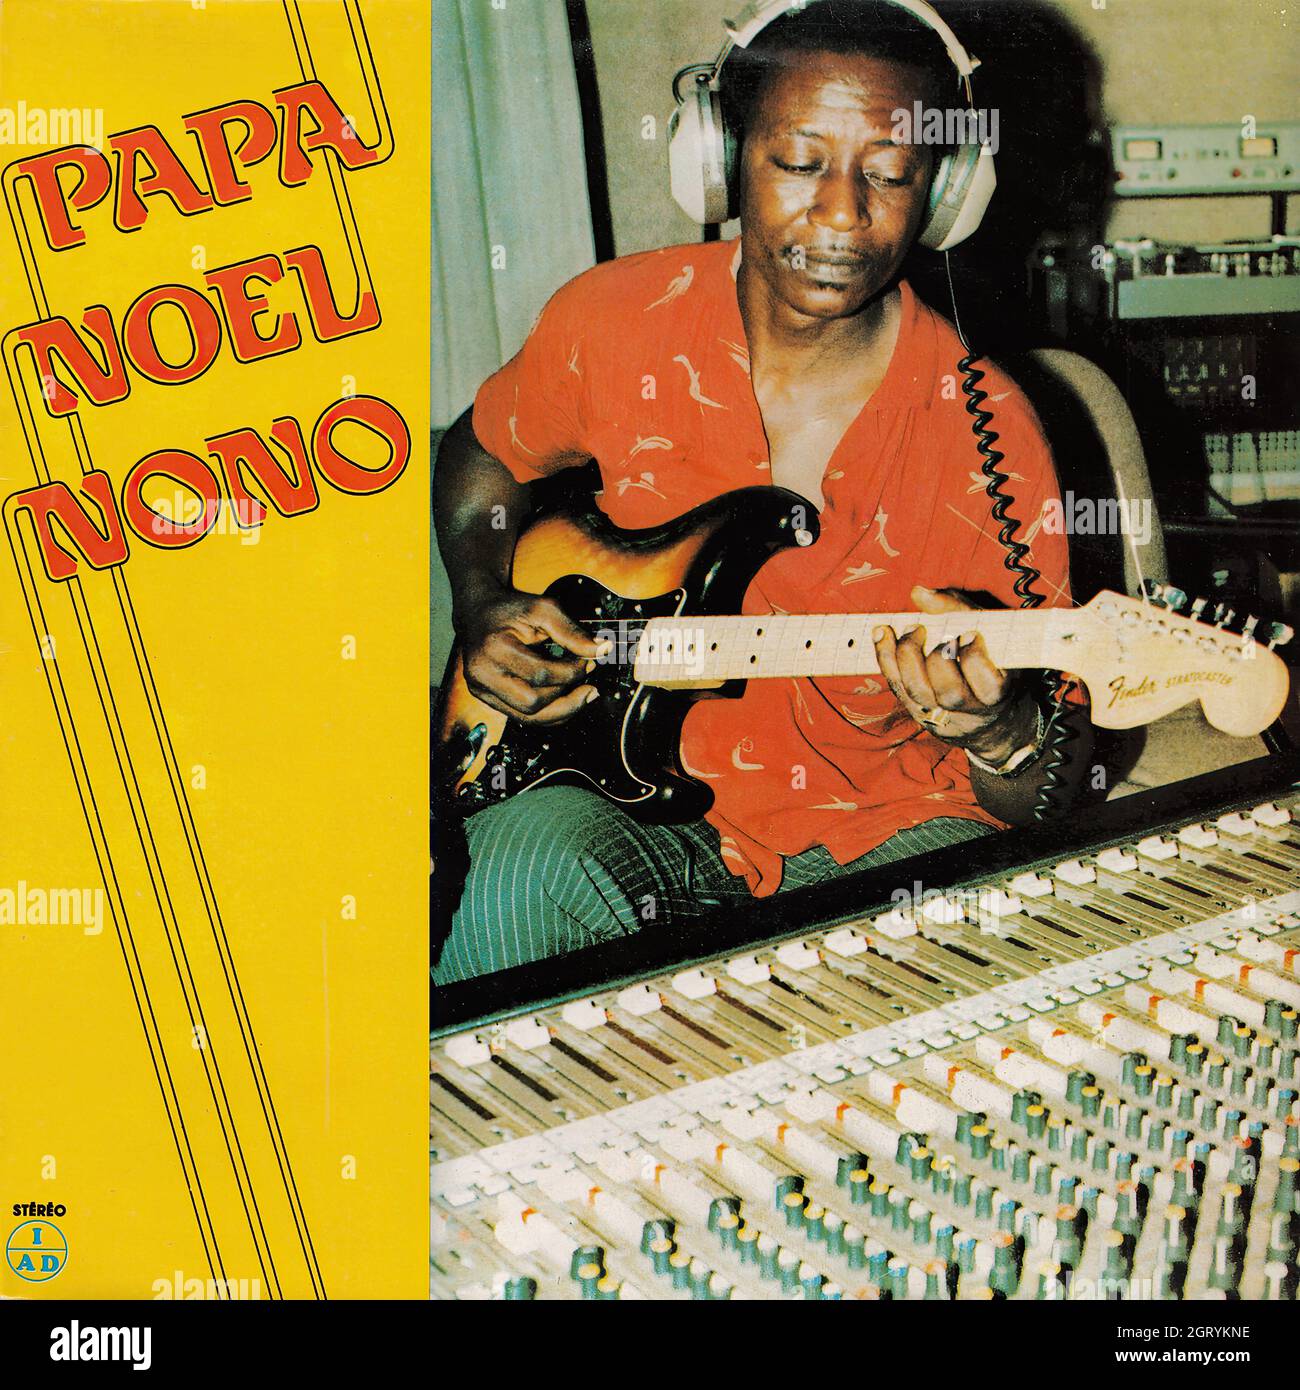 Papa Noel Nono - Papa Noel Nono - Vintage Vinyl Record Cover Stock Photo